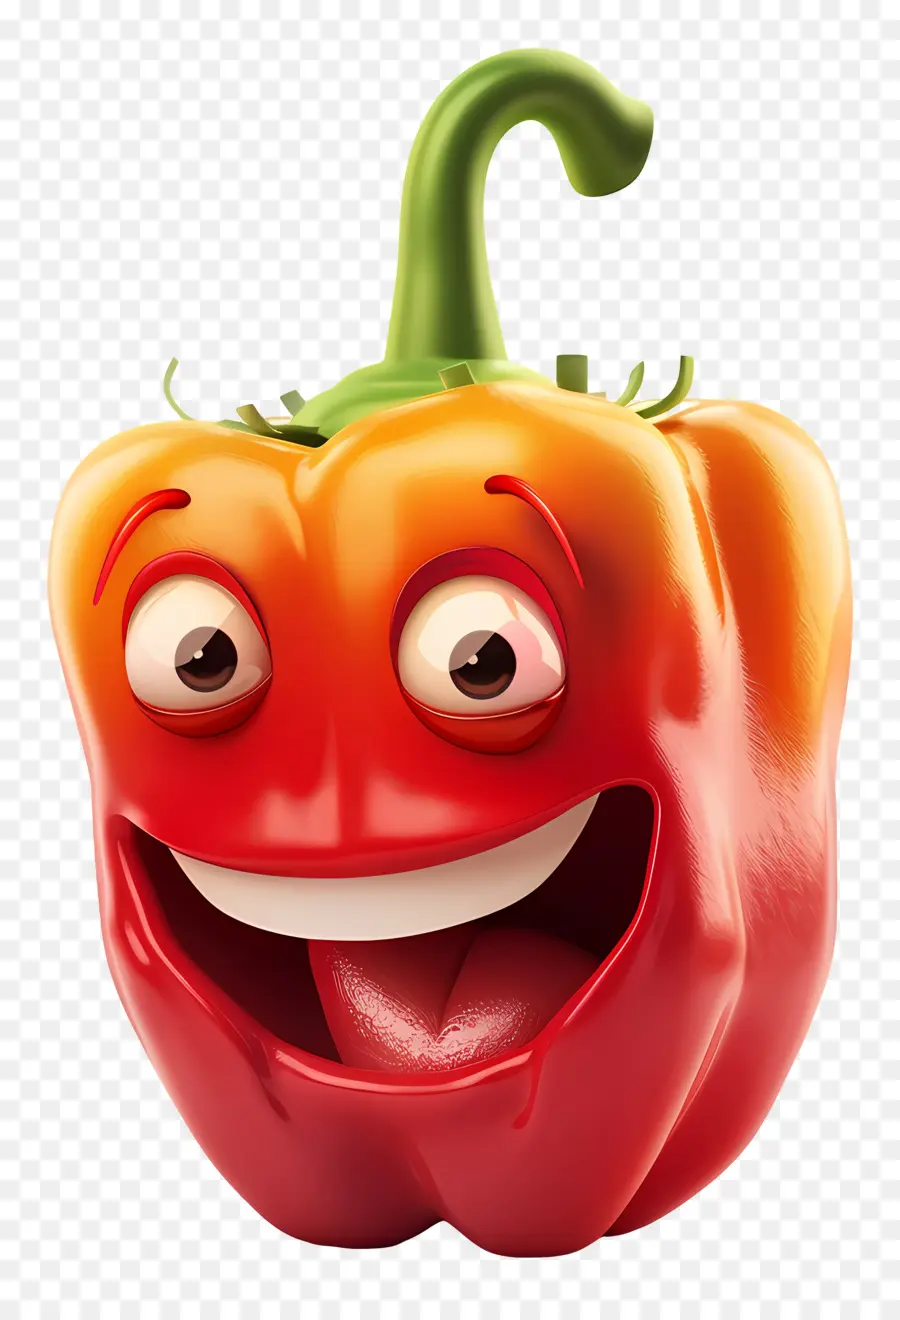 3D -Cartoon Gemüse rot Paprika Cartoon glücklich lächeln - Happy Cartoon rotem Paprika in Schuhen